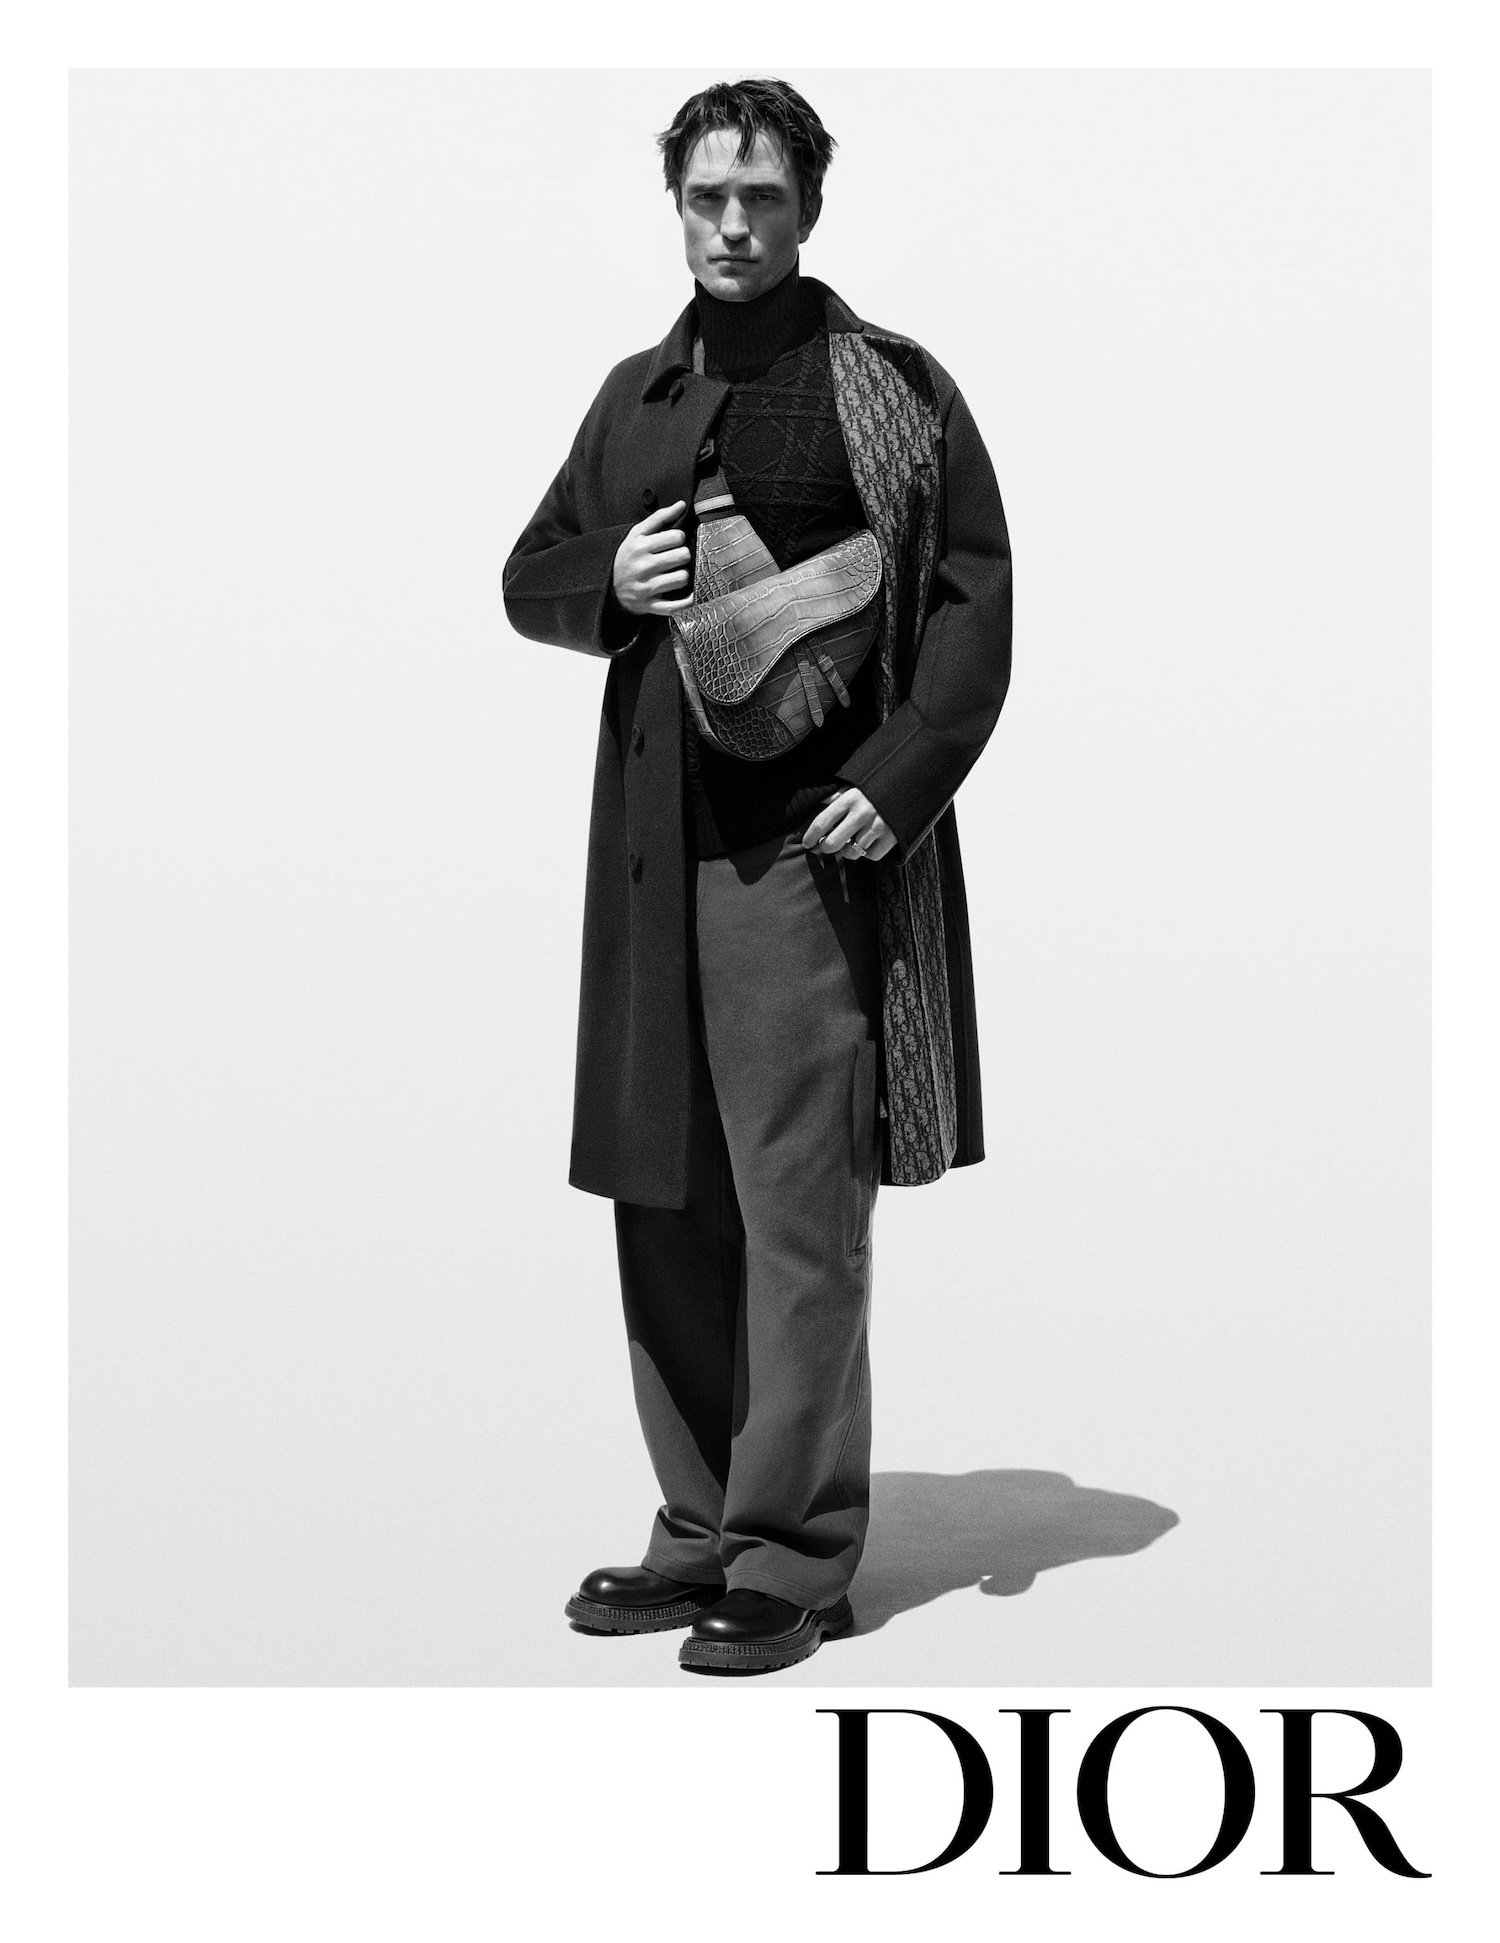 Dior-Men-Icons-Robert-Pattinson-by-Alasdair-McLellan-5.jpg